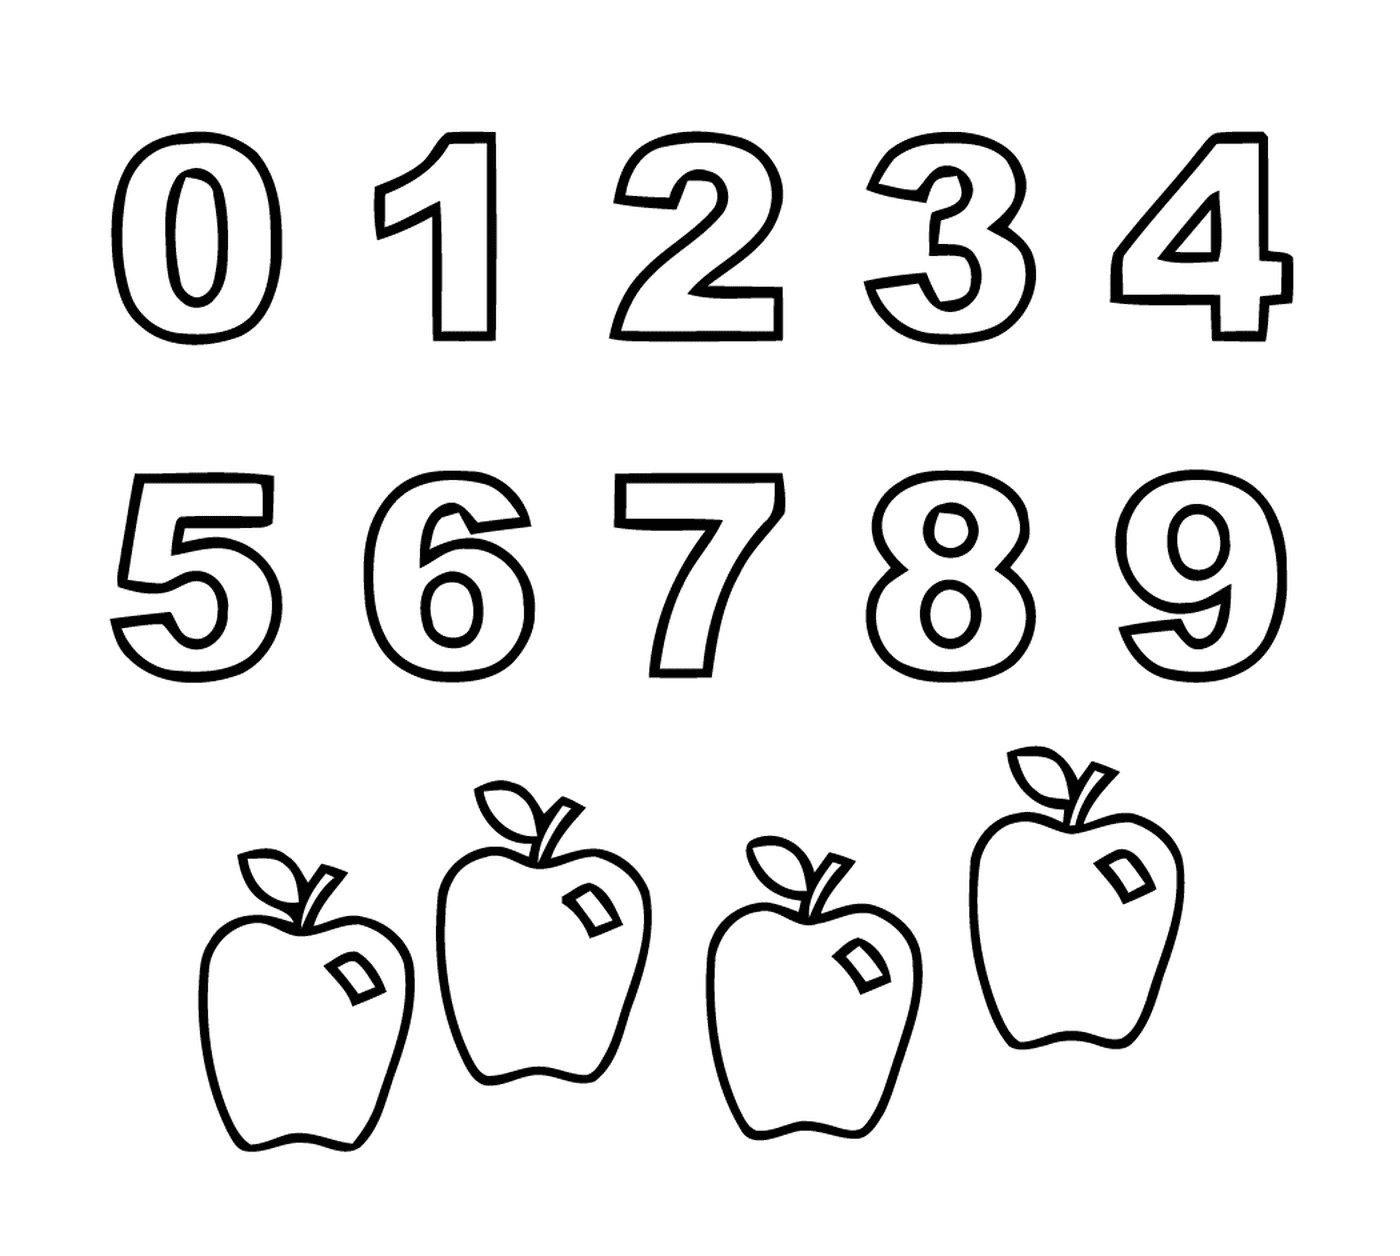  Zero to nine figures for children with apples 